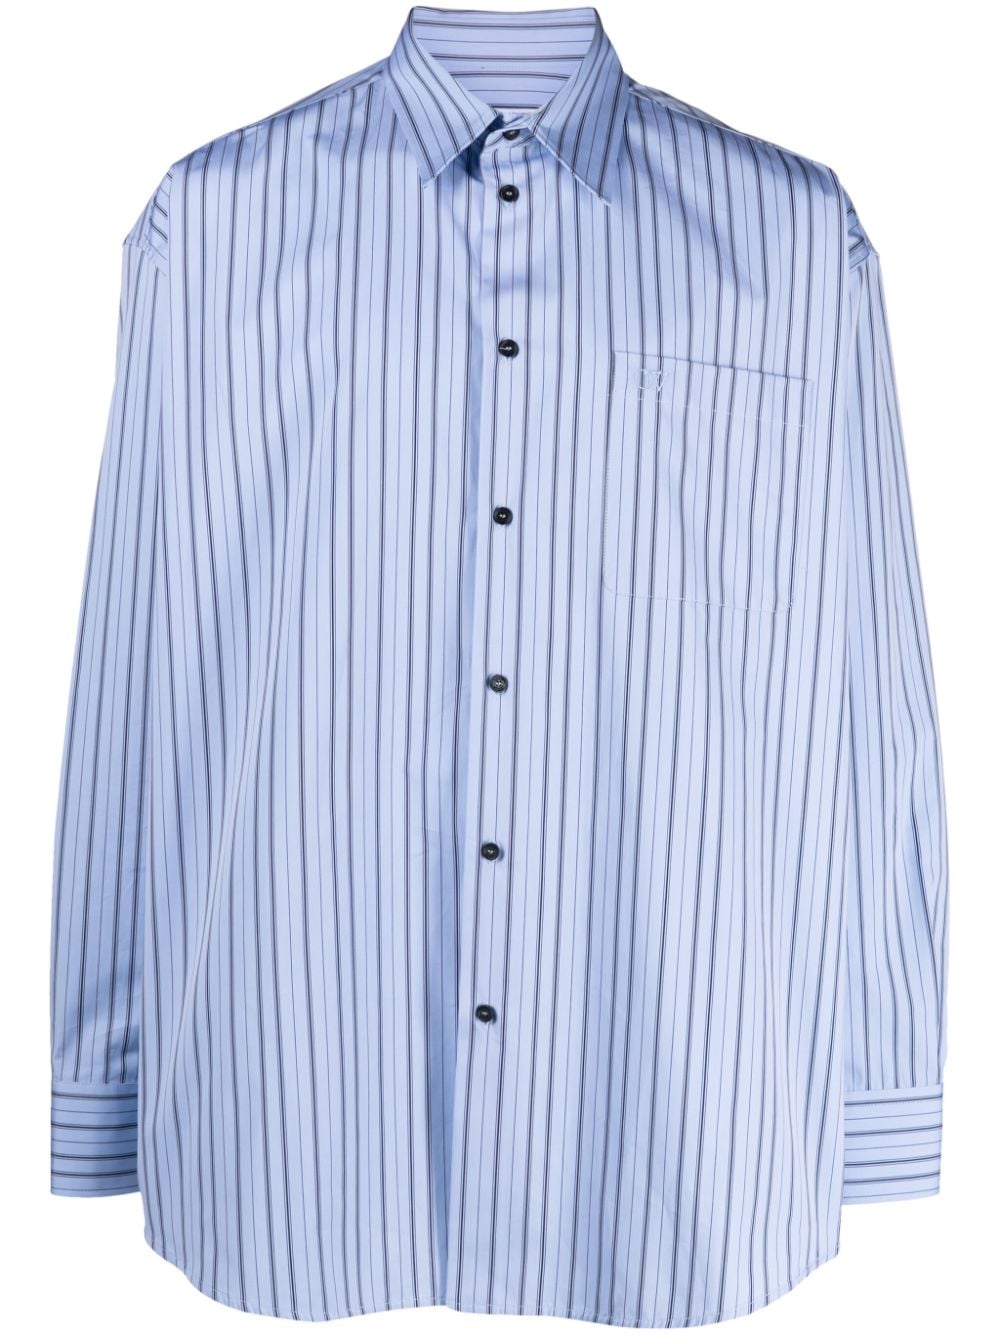 Vertical stripe pattern shirt